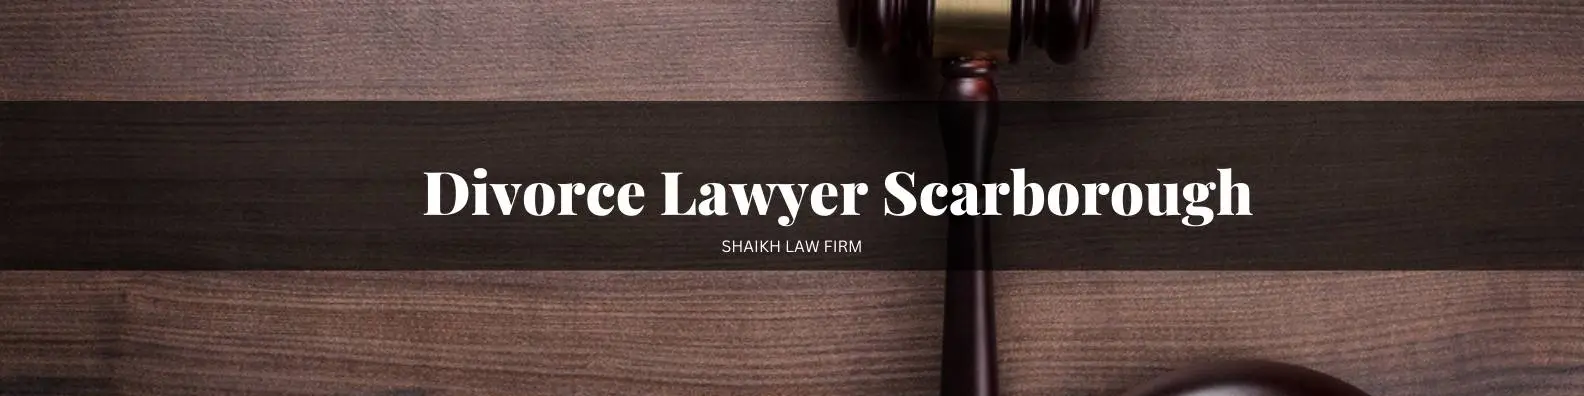 Divorce-Lawyer-Scarborough